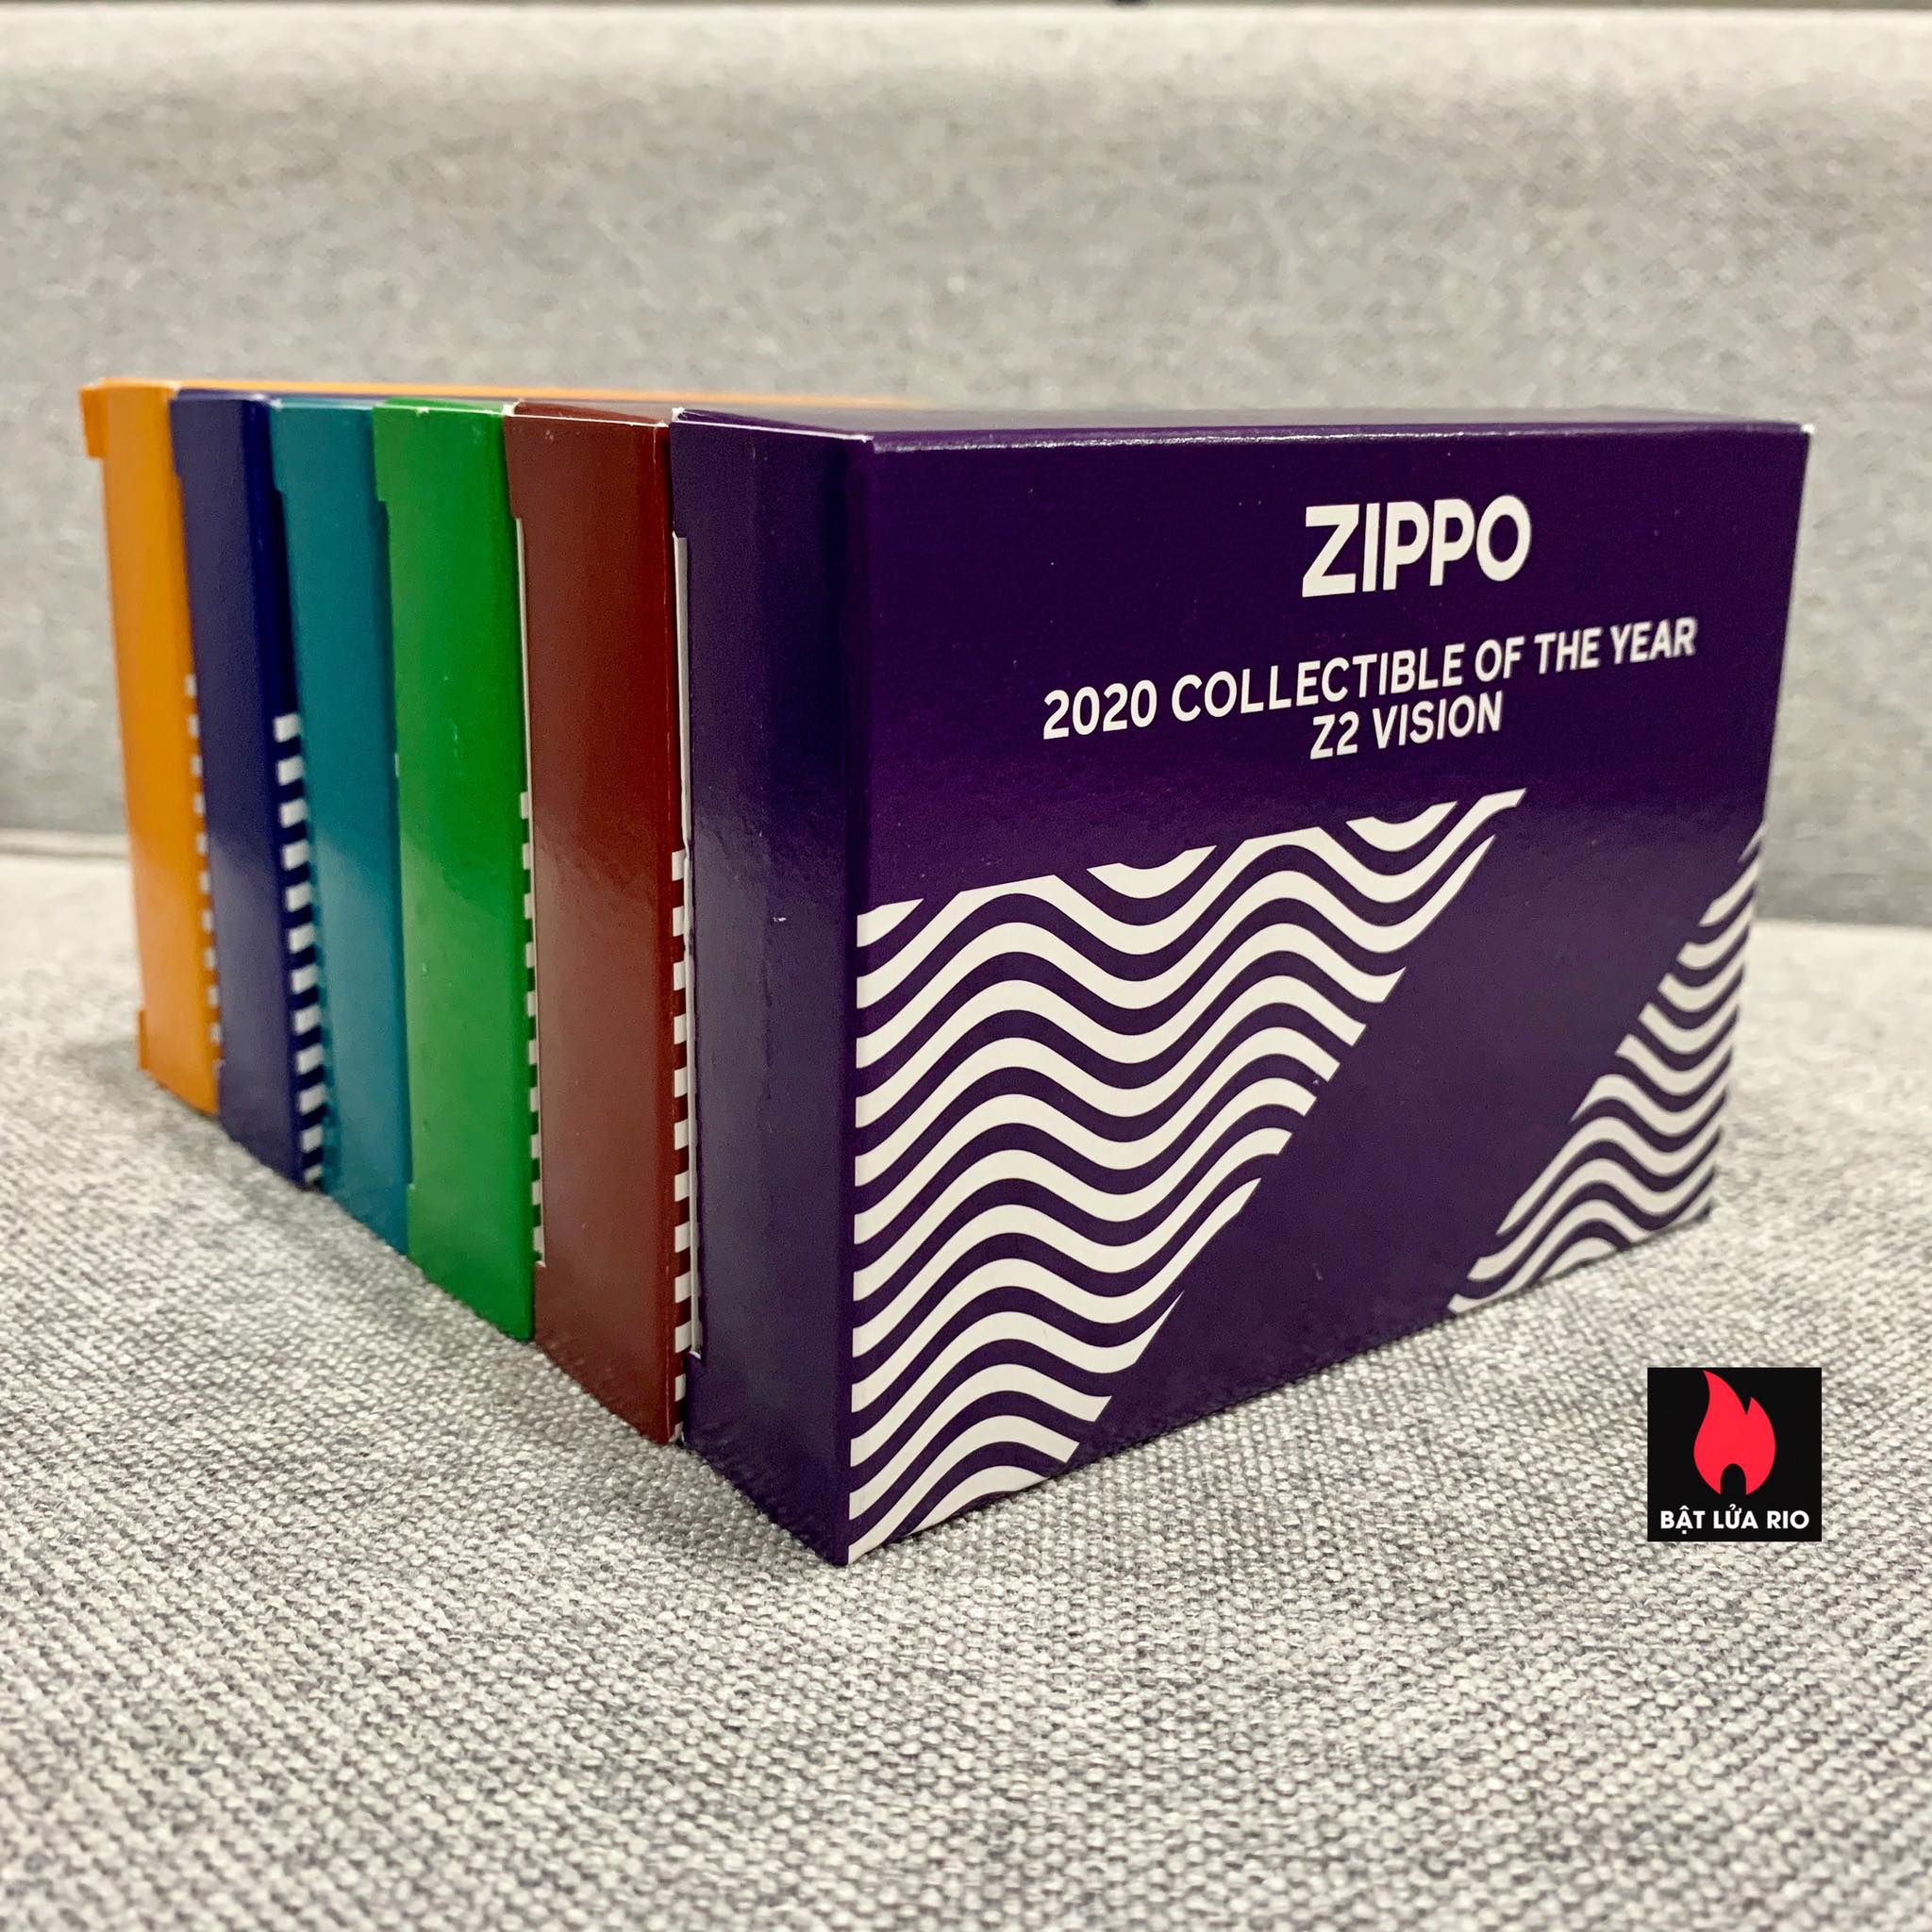 Zippo 49194 - Zippo 2020 Collectible Of The Year - Zippo Coty 2020 - Zippo Z2 Vision 39